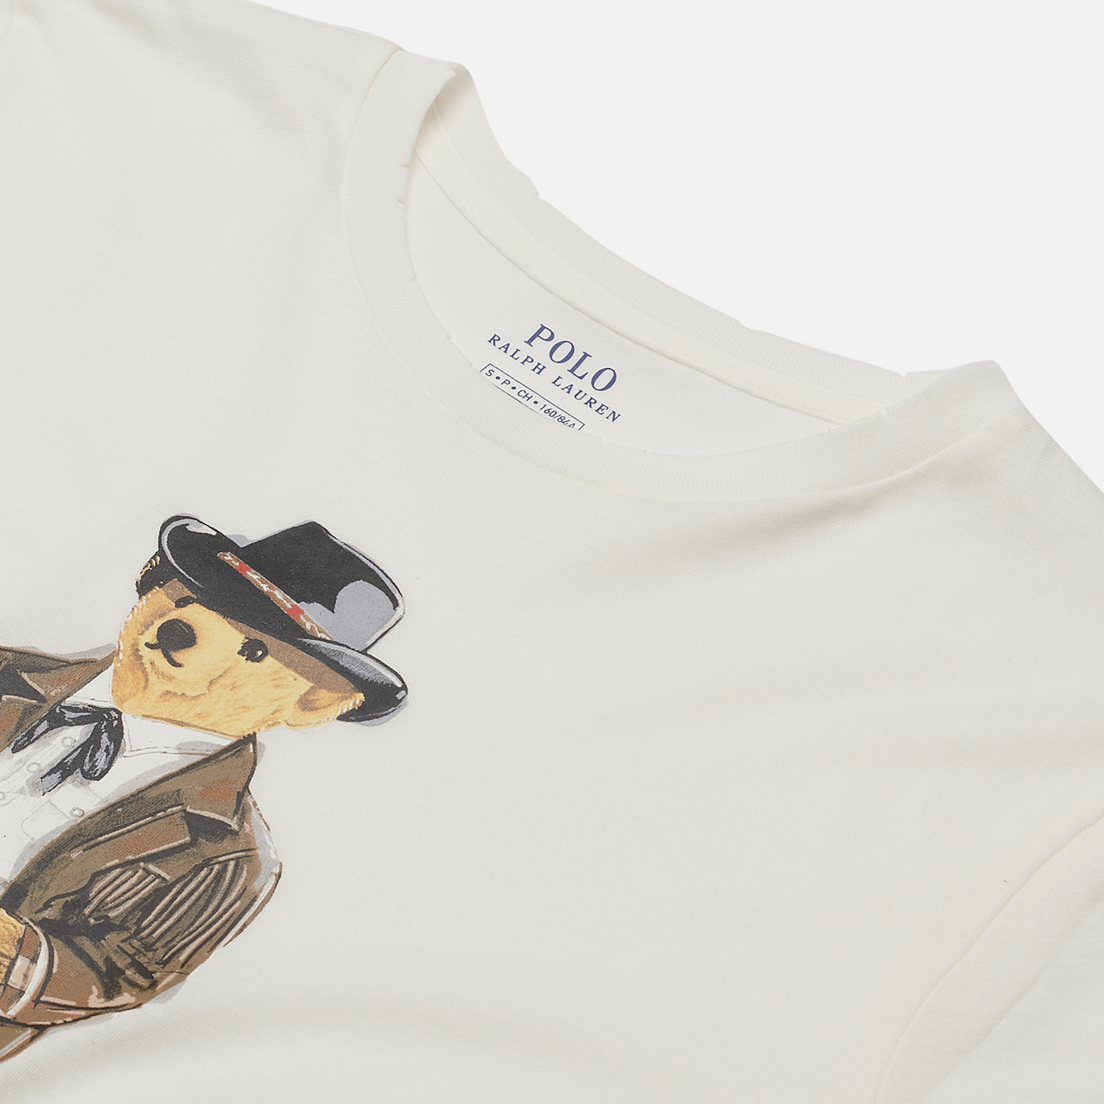 Polo Ralph Lauren Женская футболка Bear Western Inspired Attire